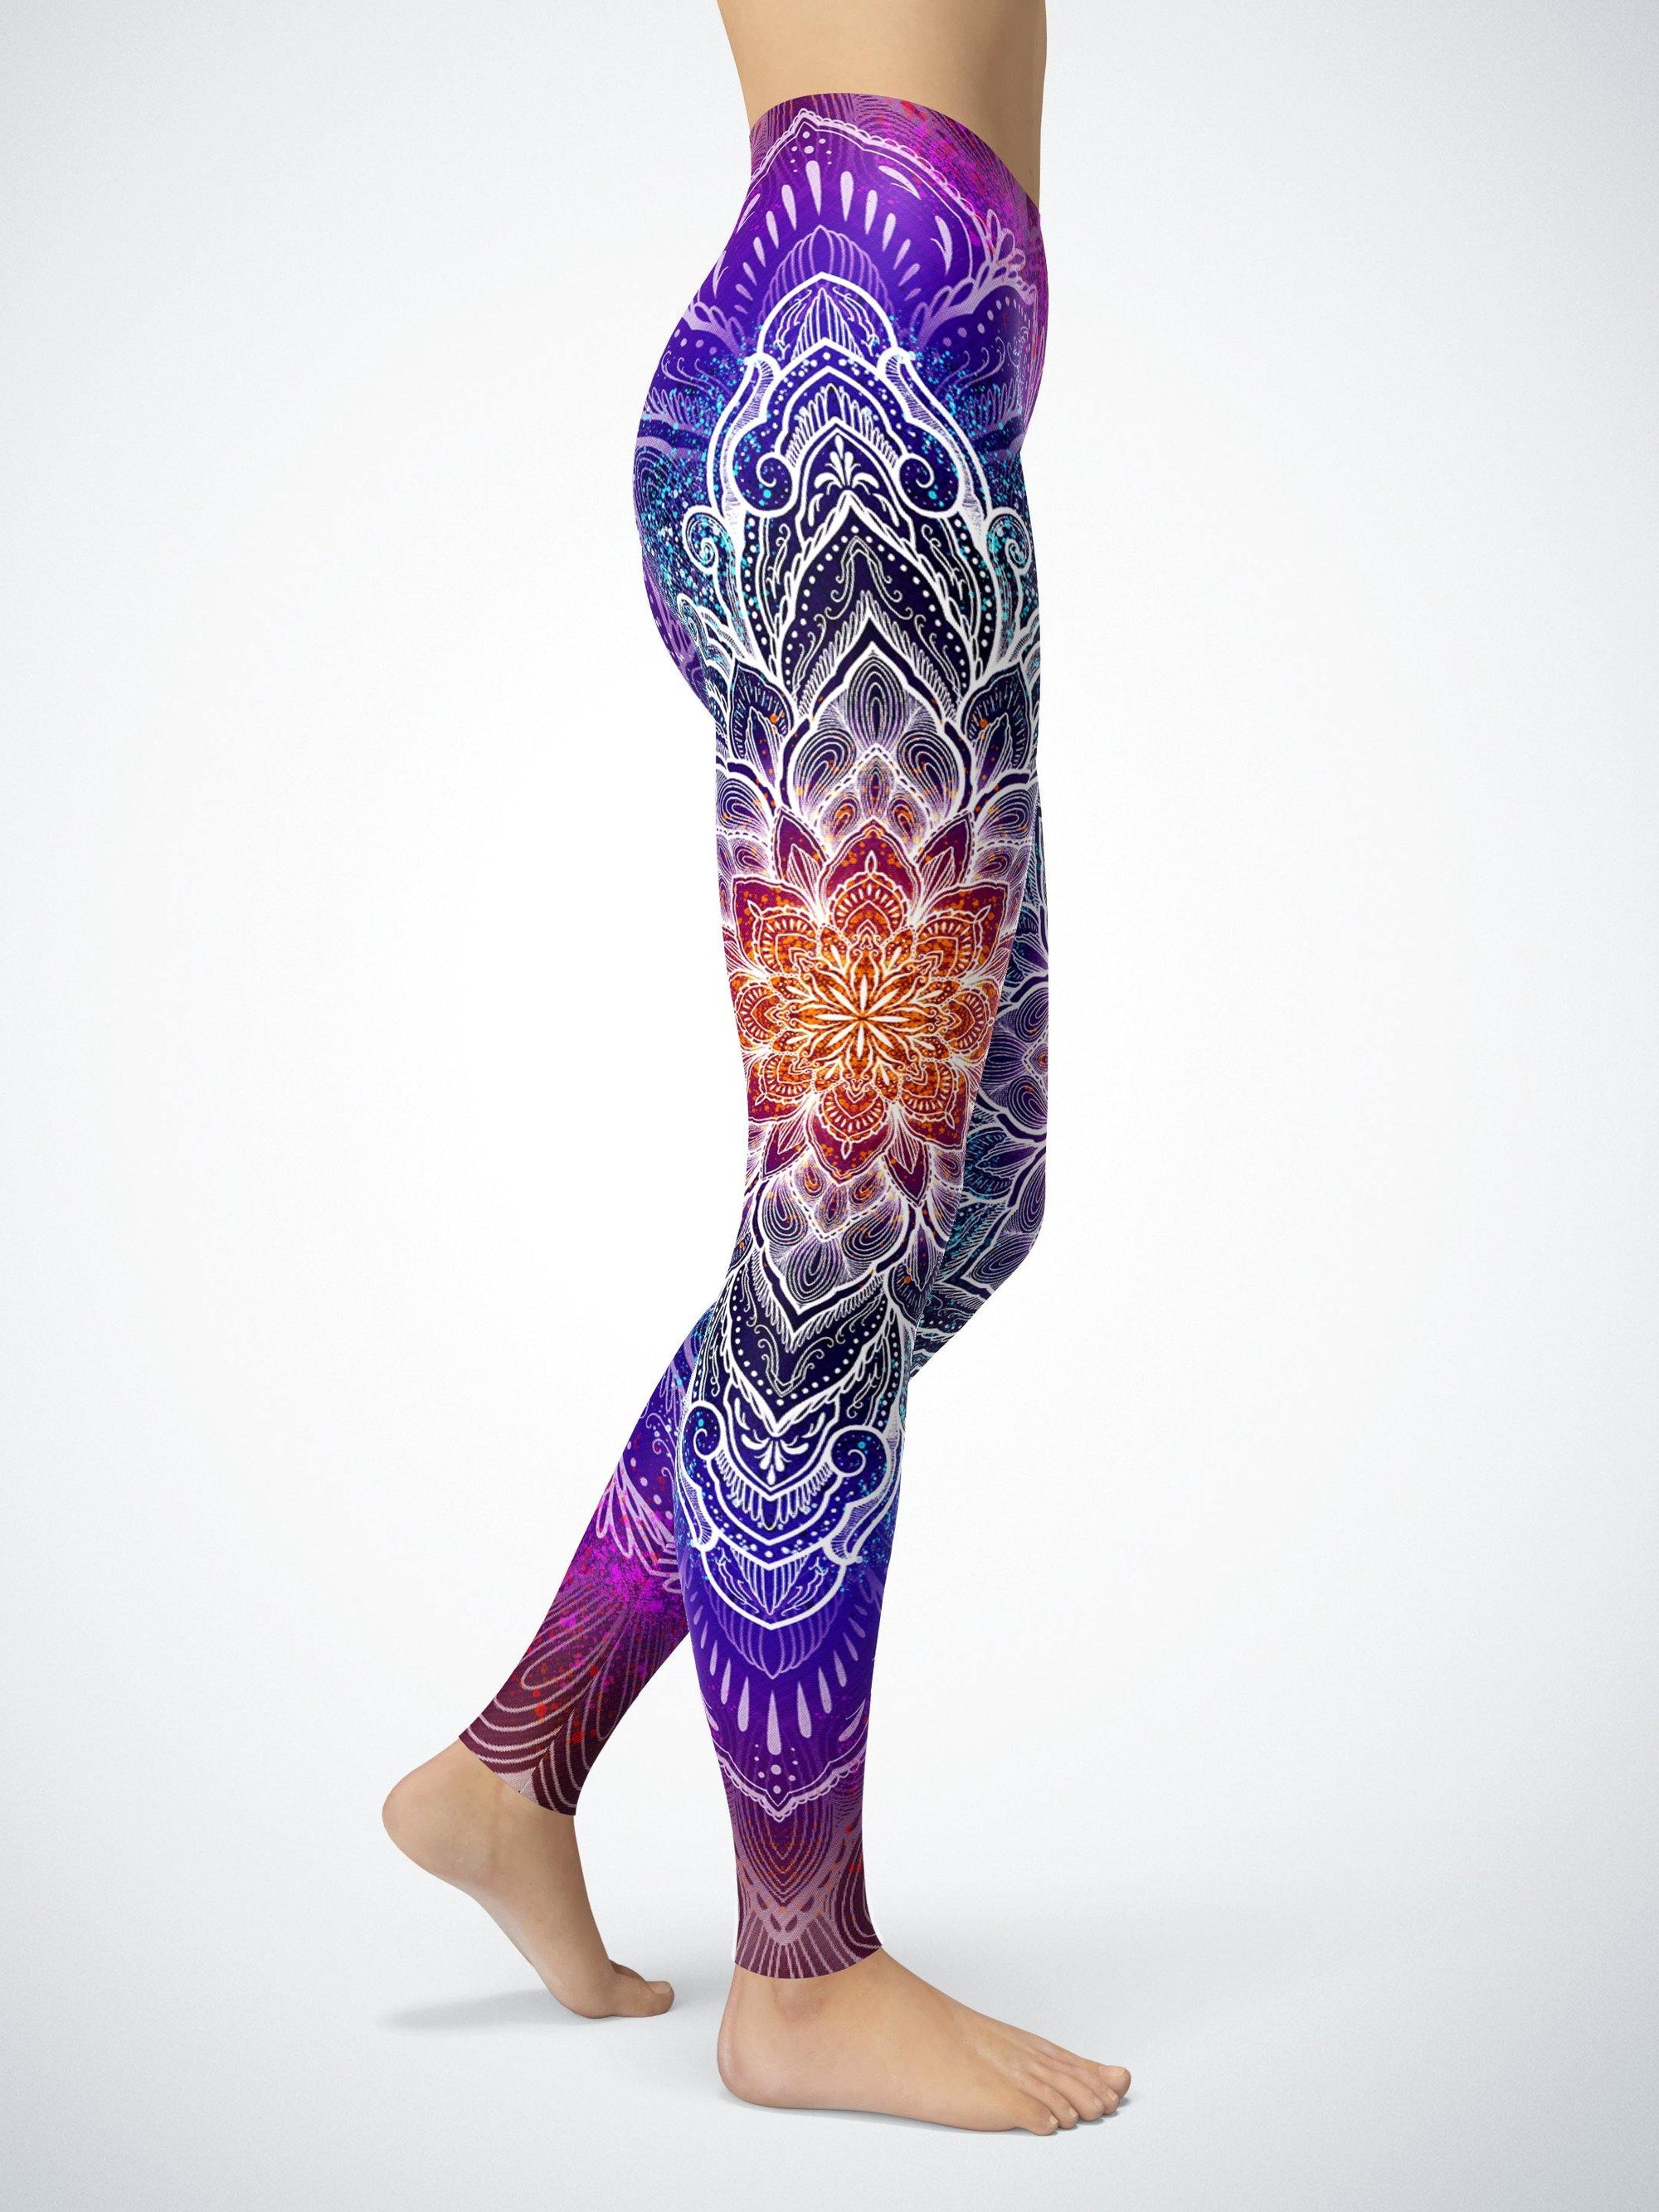 Spark of Joy Yoga Pants - Electro Threads